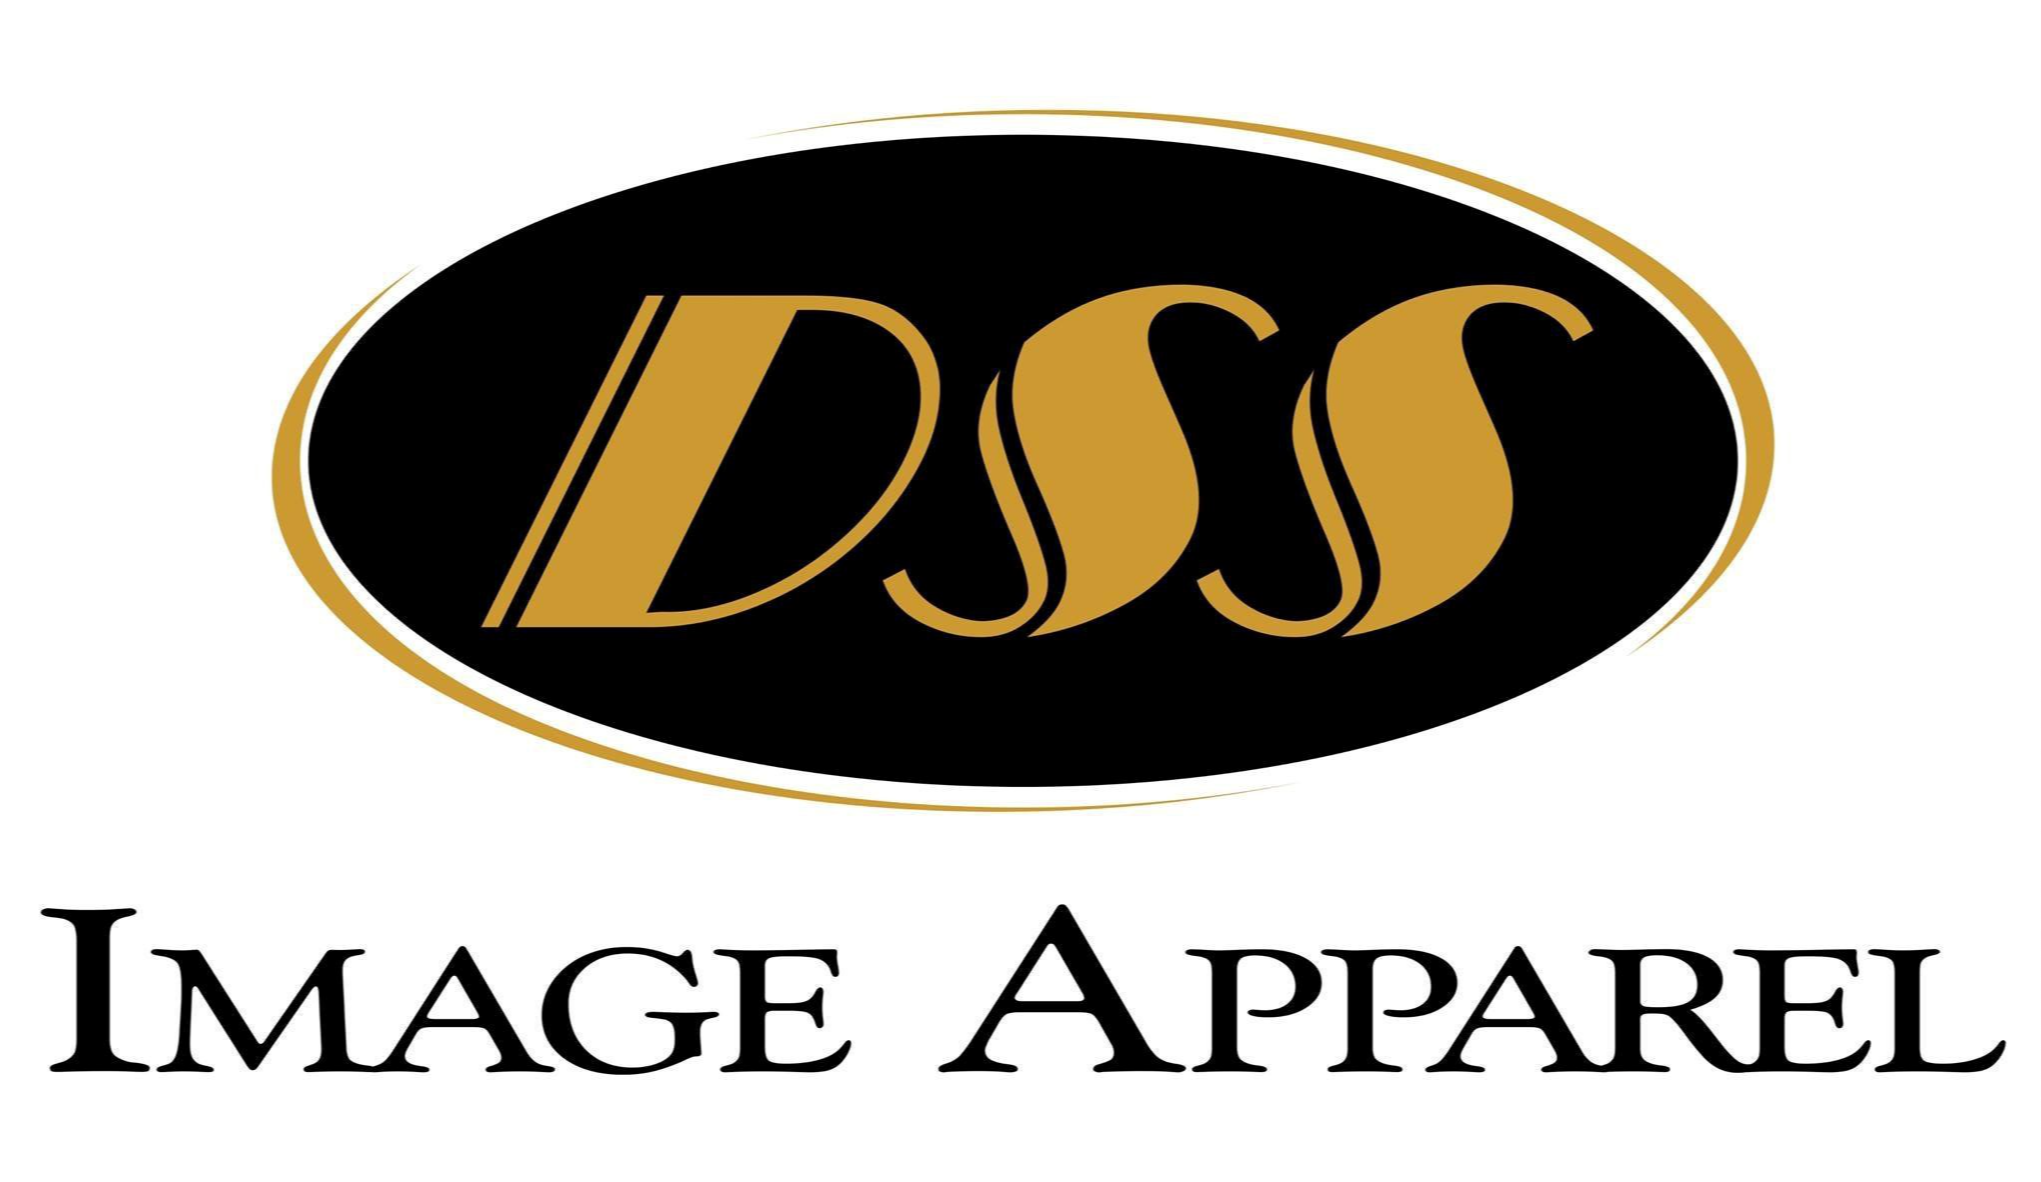 DSS Image Apparel